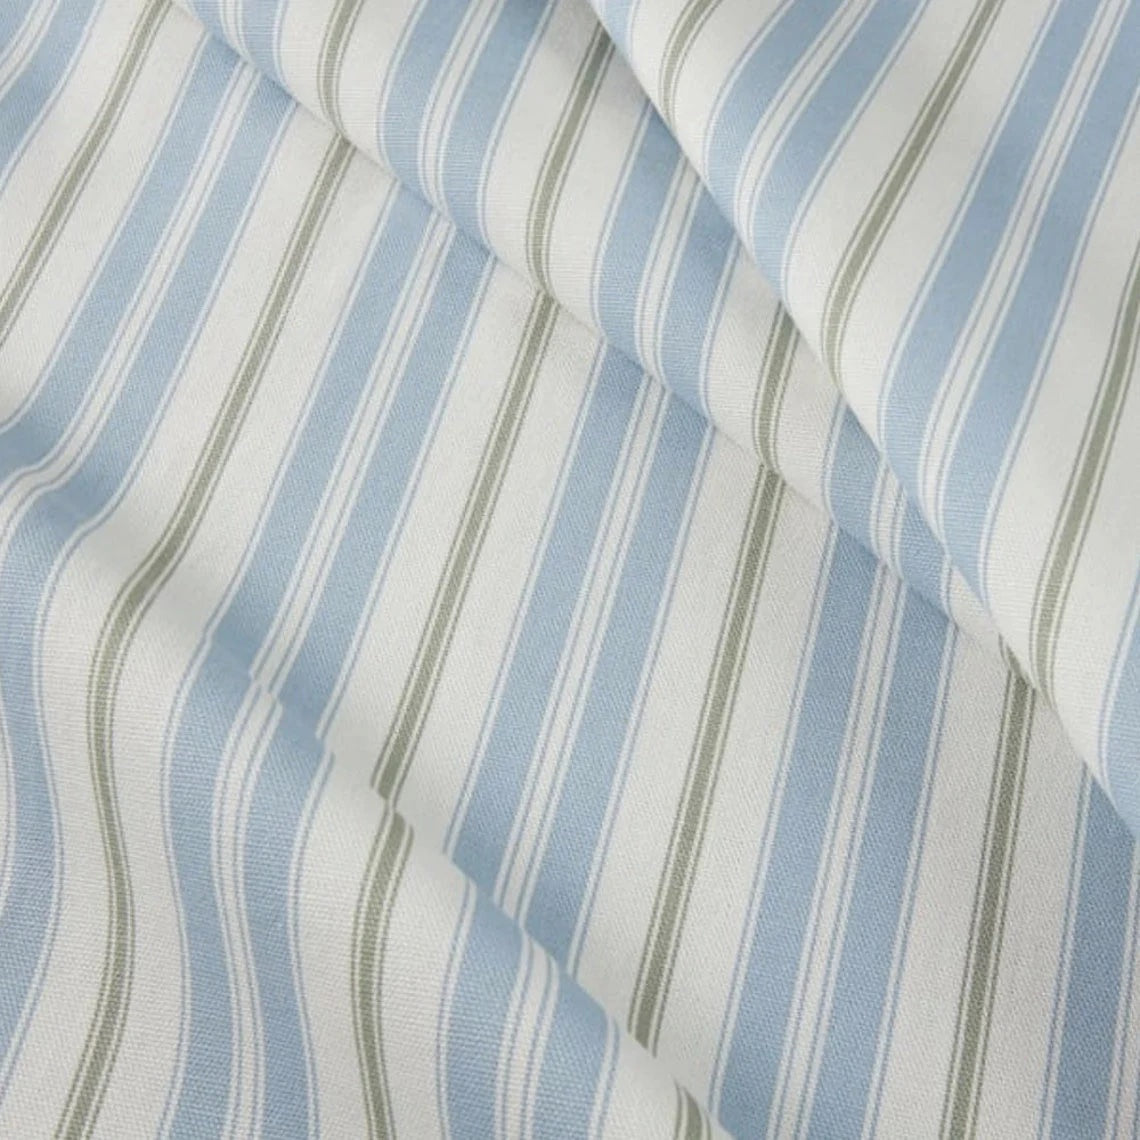 tailored crib skirt in newbury antique blue stripe- blue, green, white